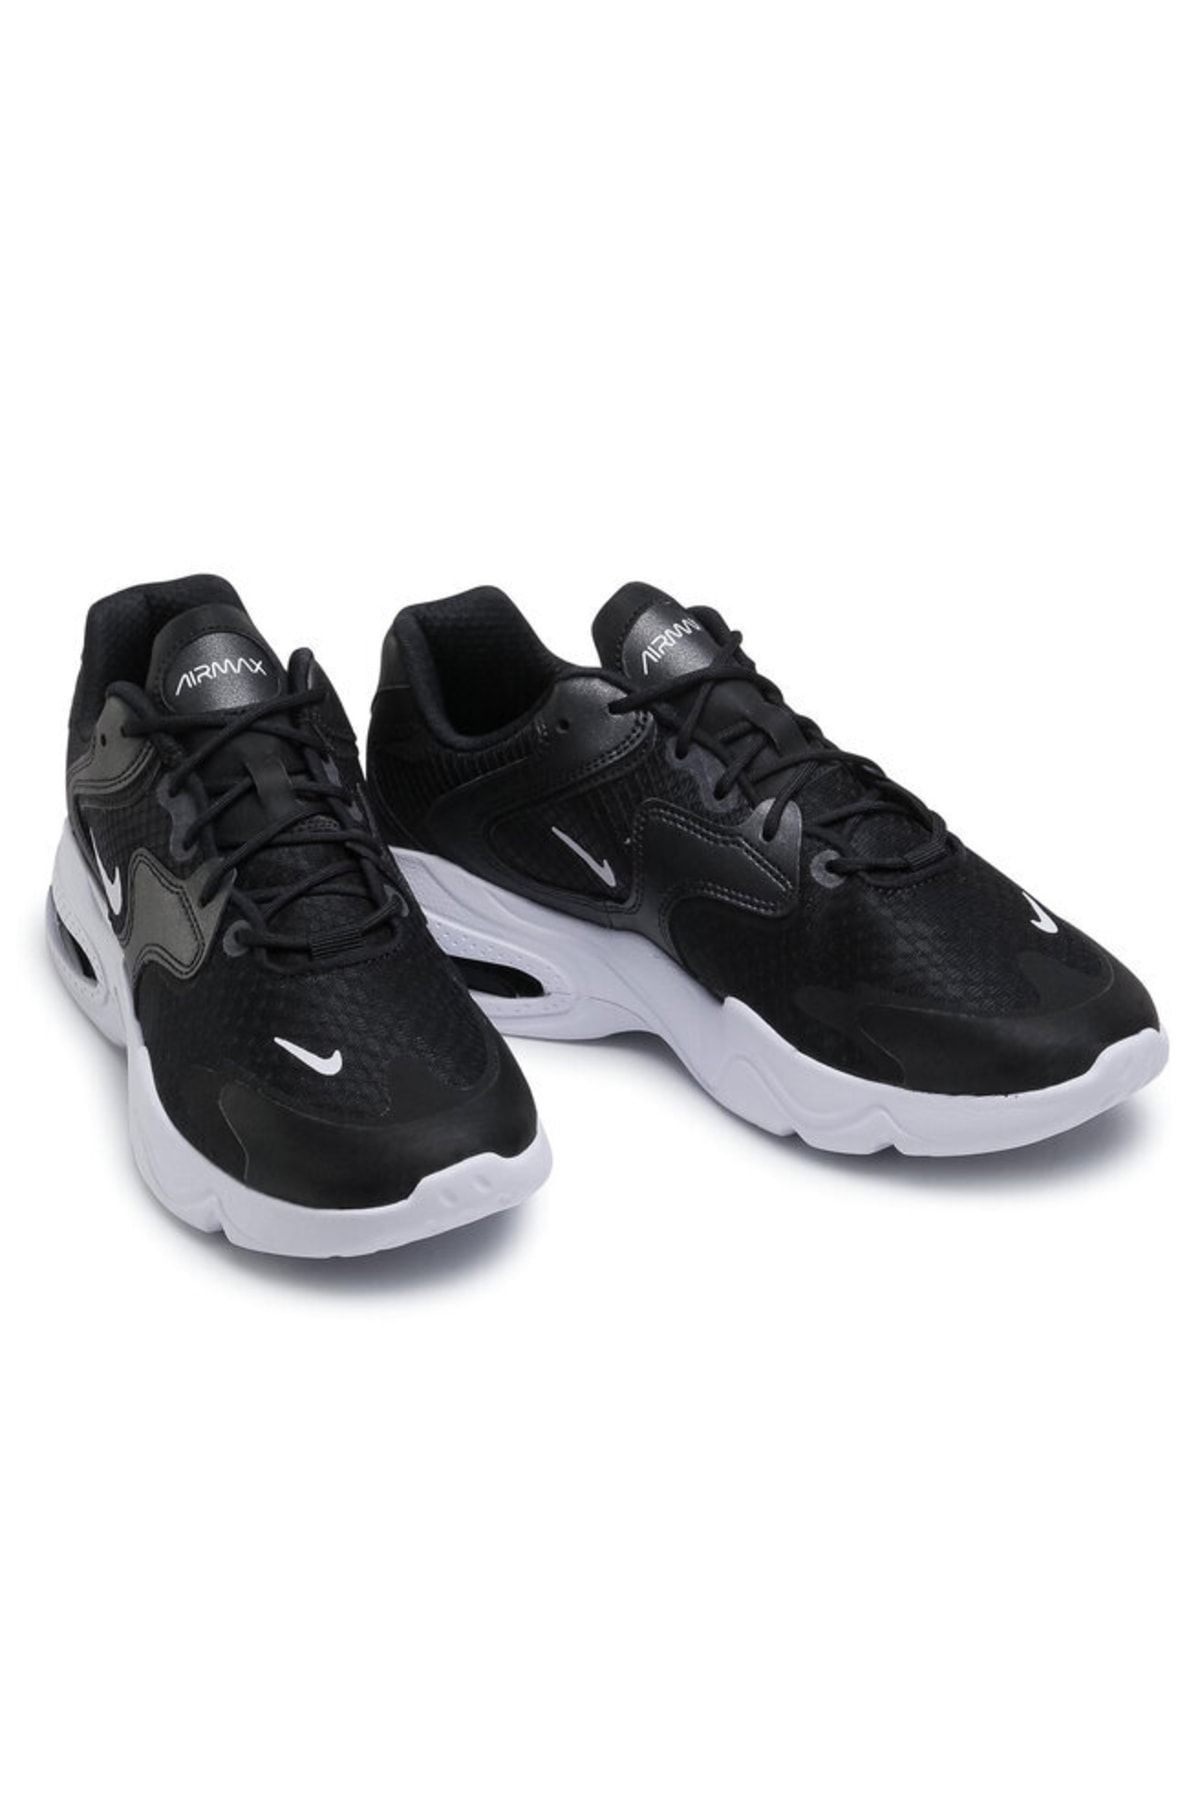 Nike Air Max 2x Erkek Koşu Ayakkabı Ck2947-001